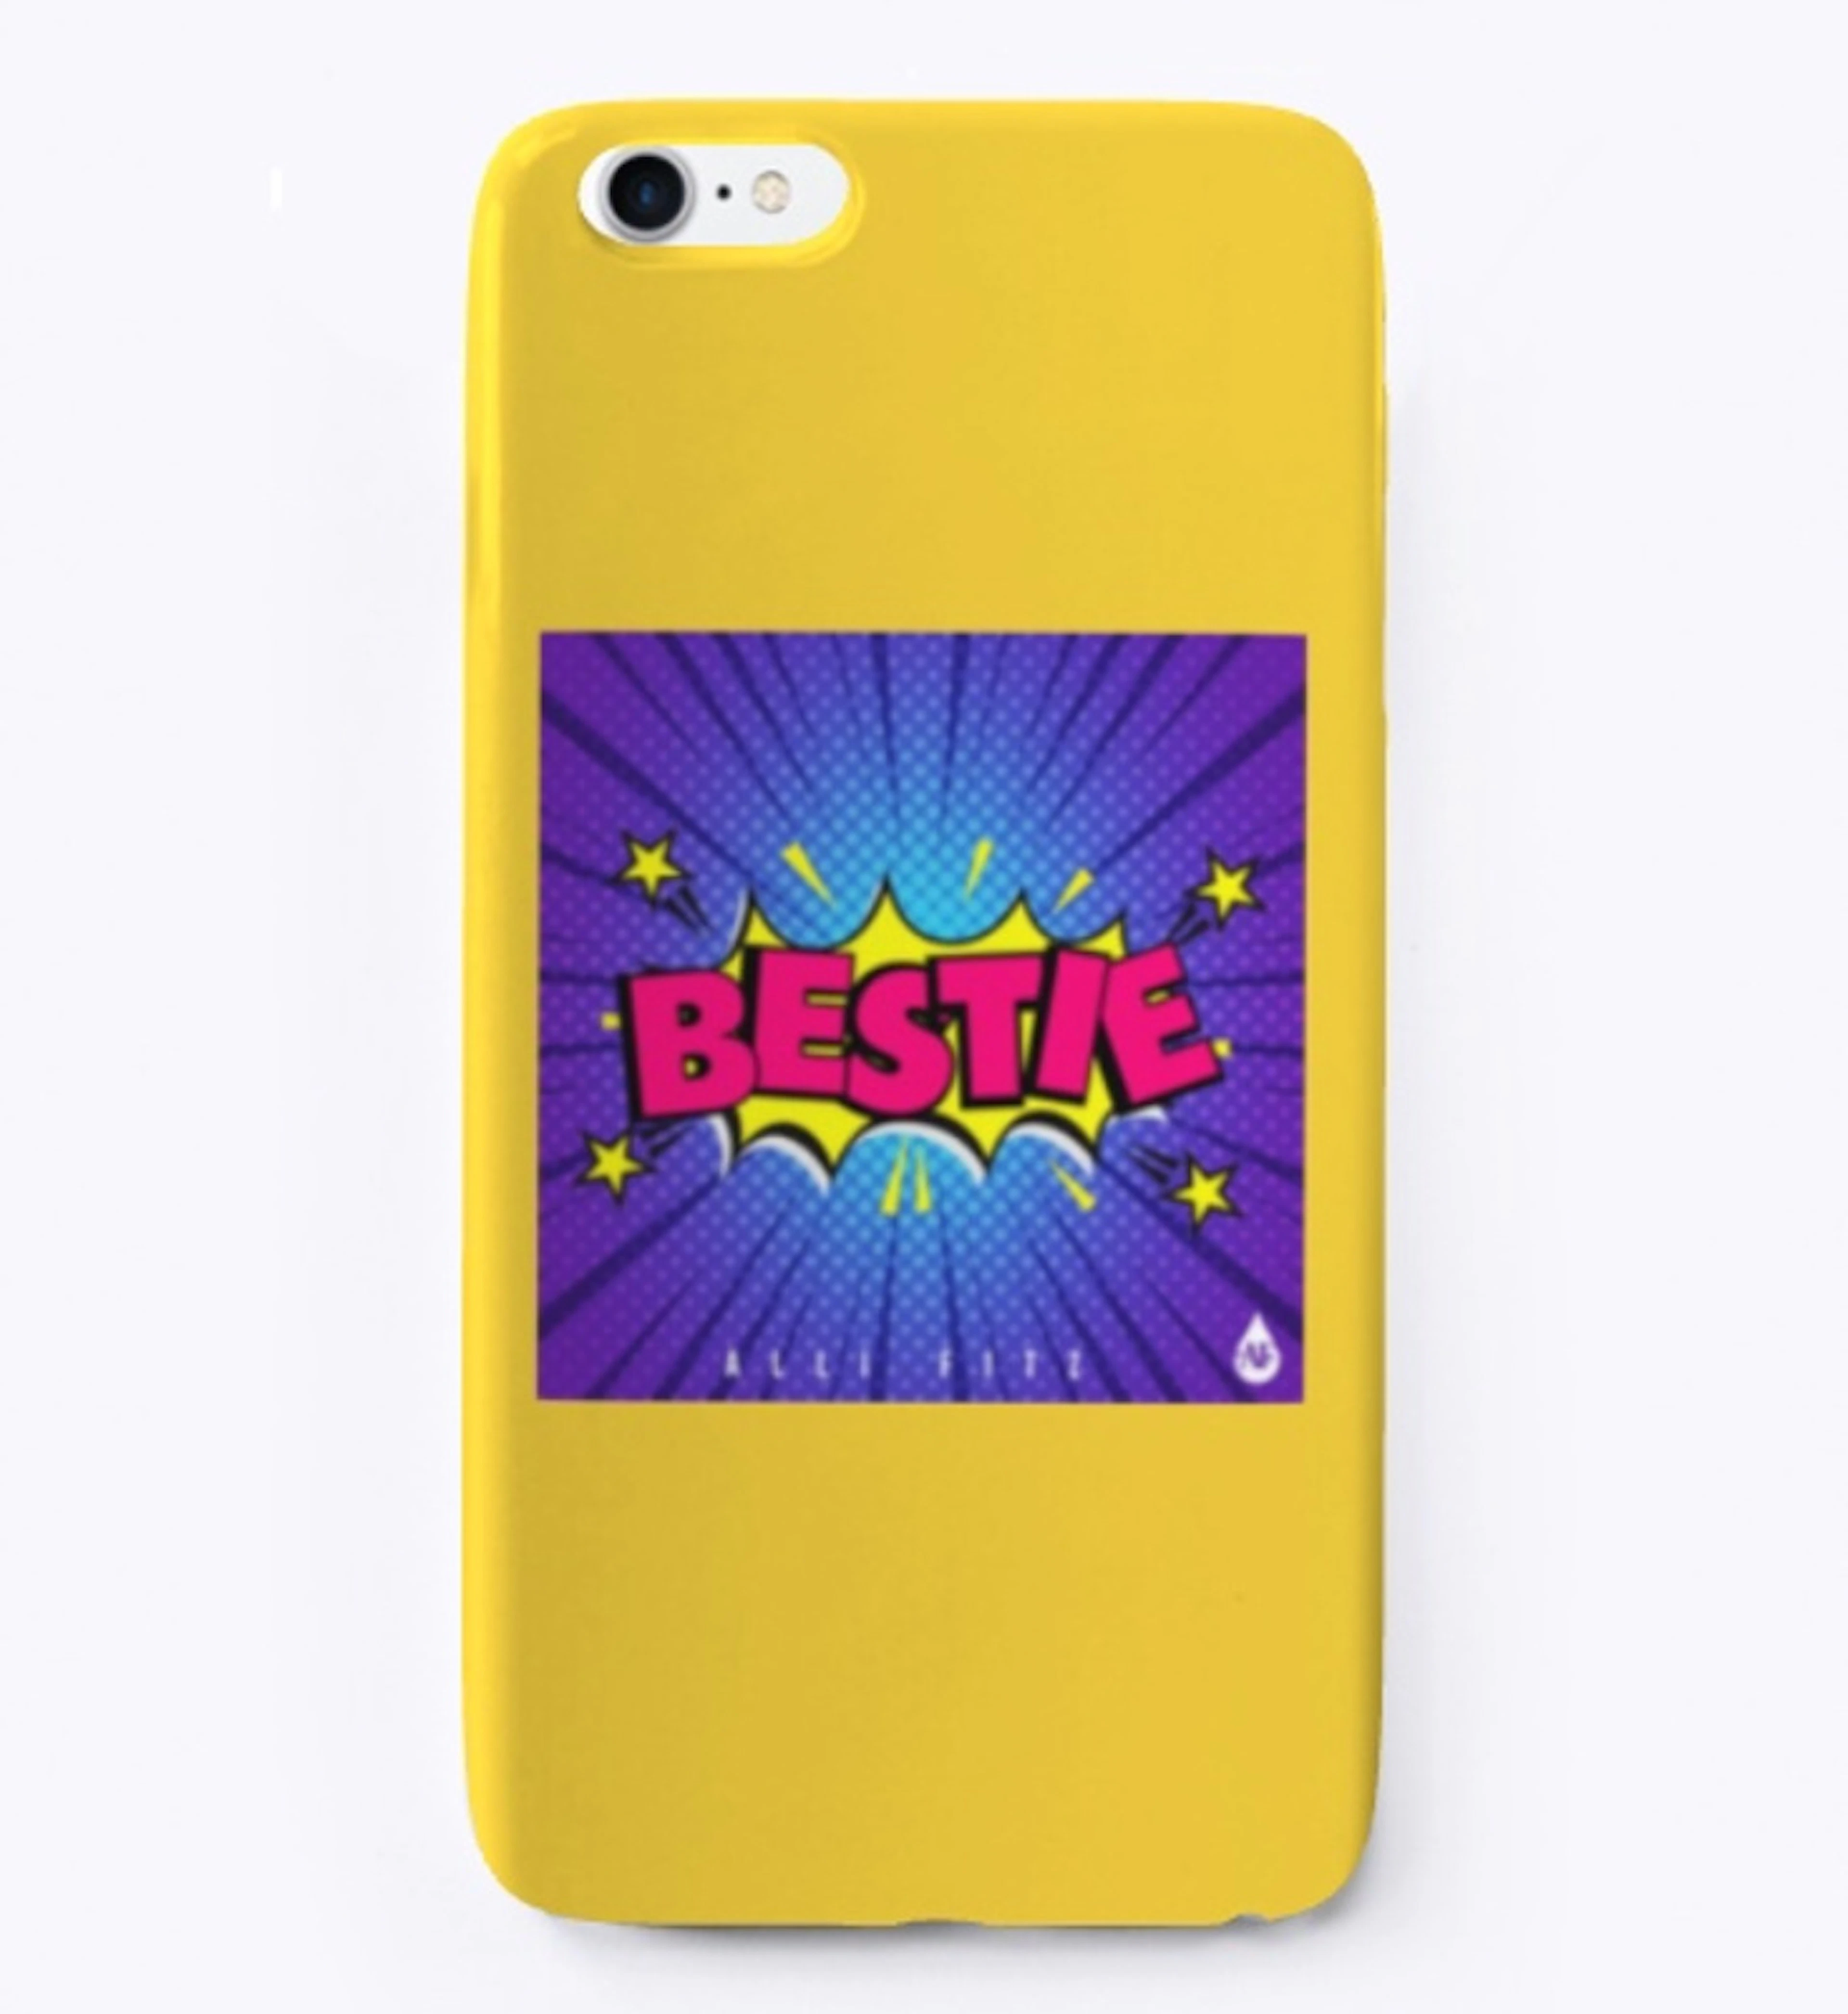 Bestie Phone Case 